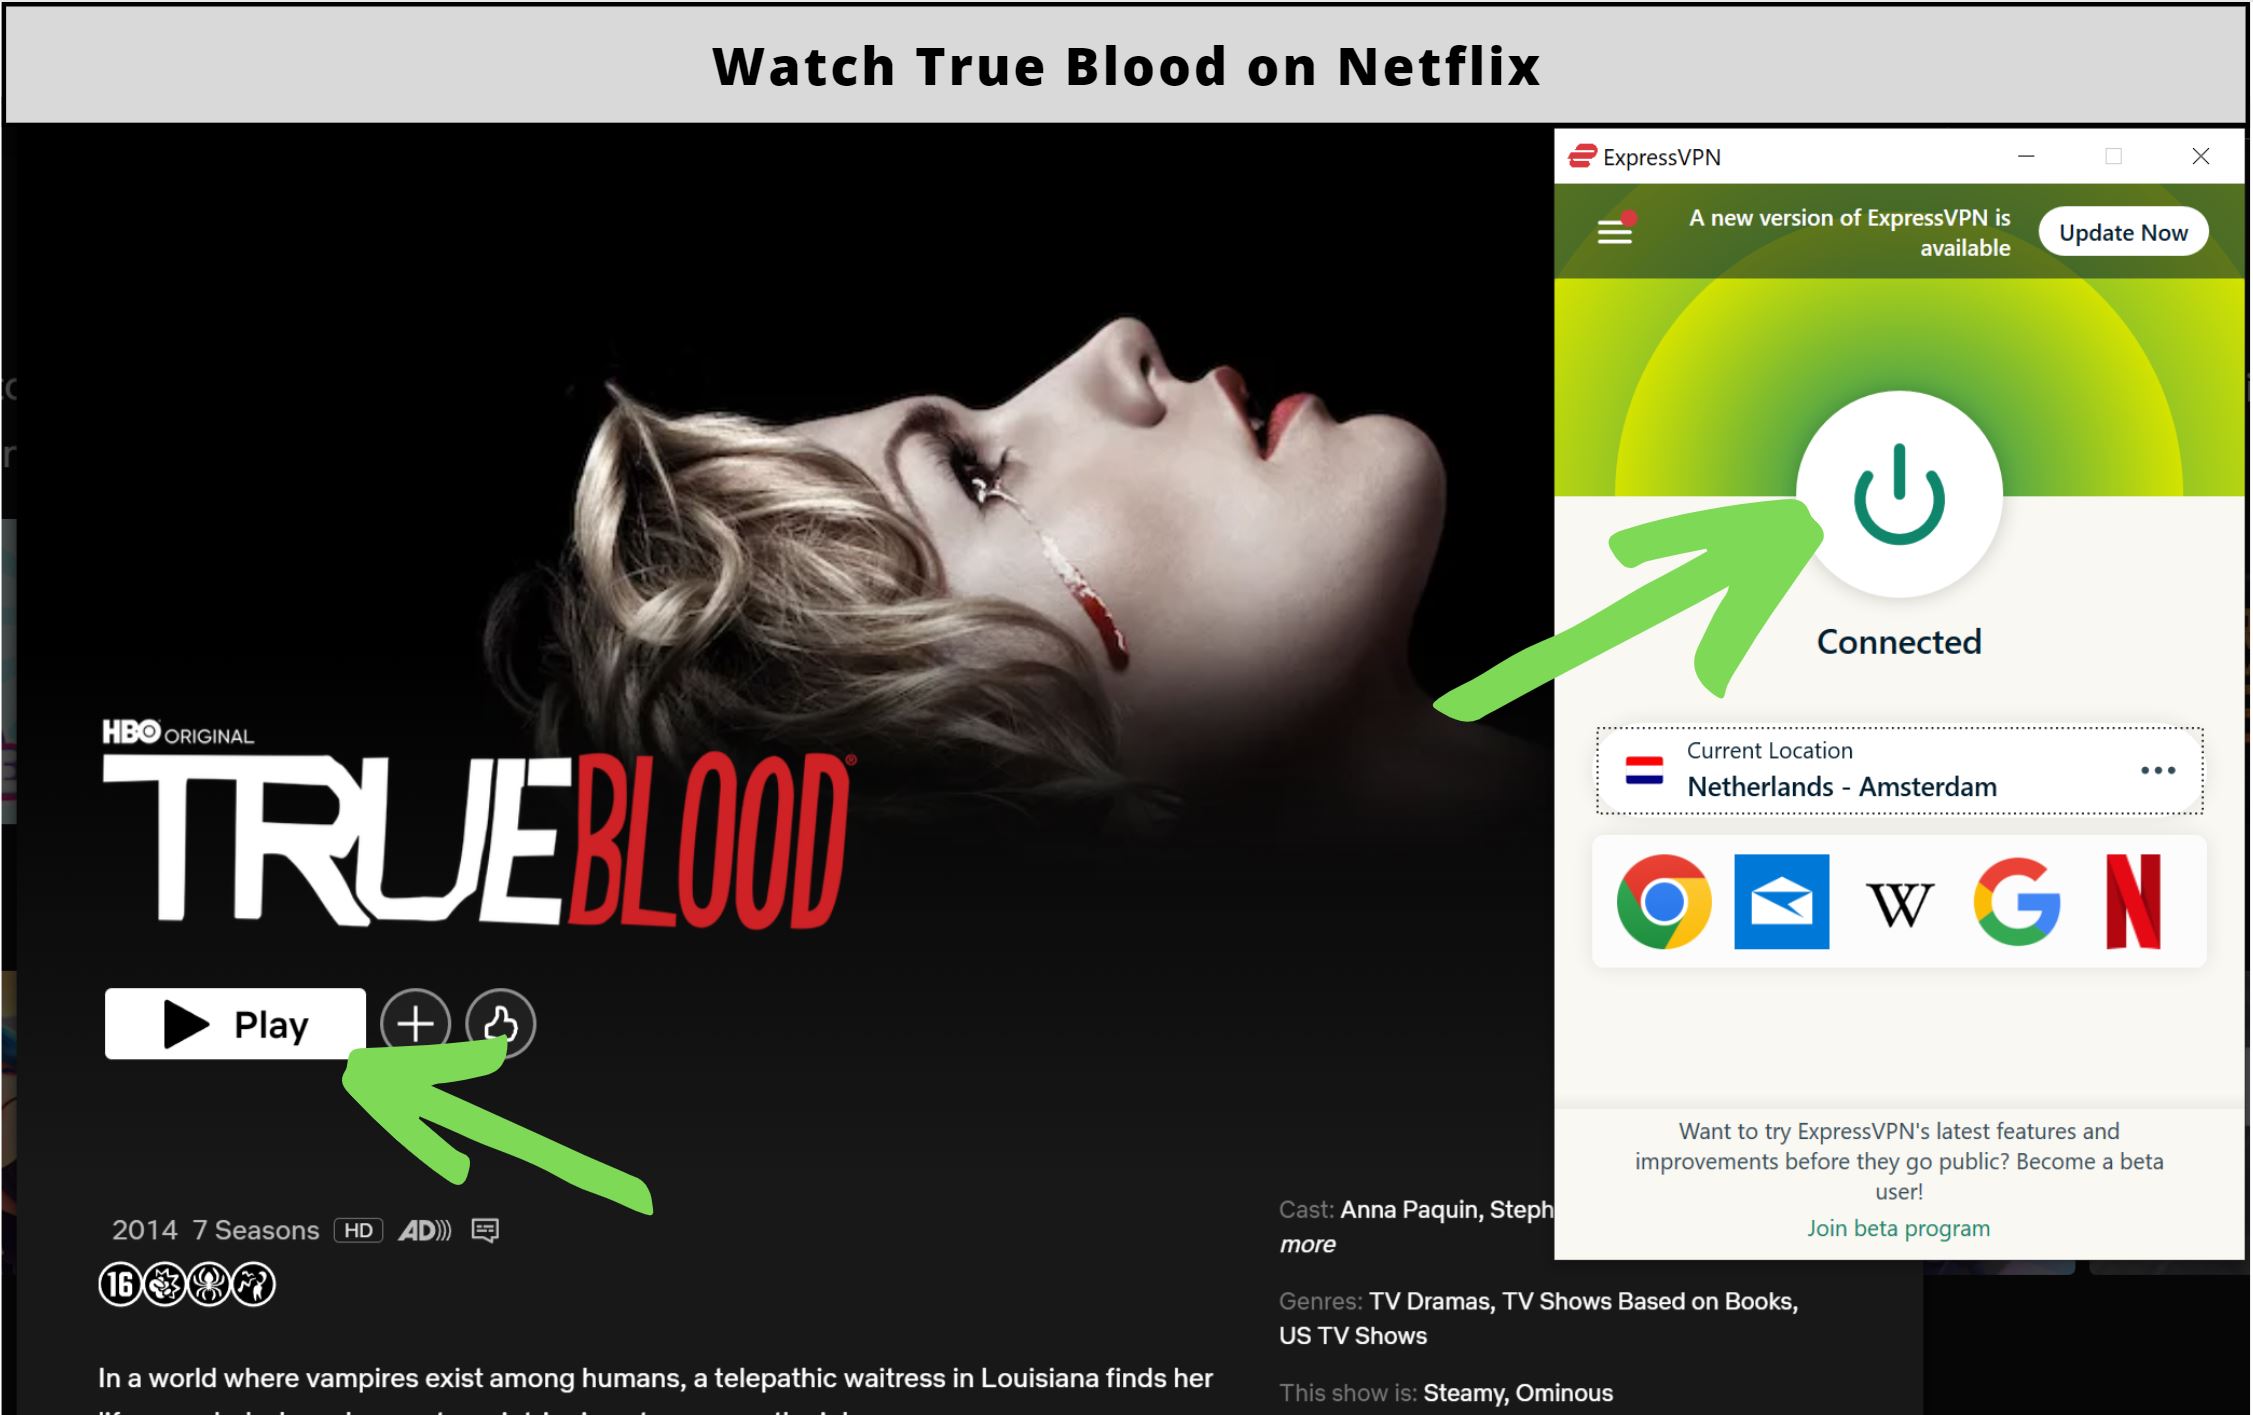 How to watch True Blood on Netflix